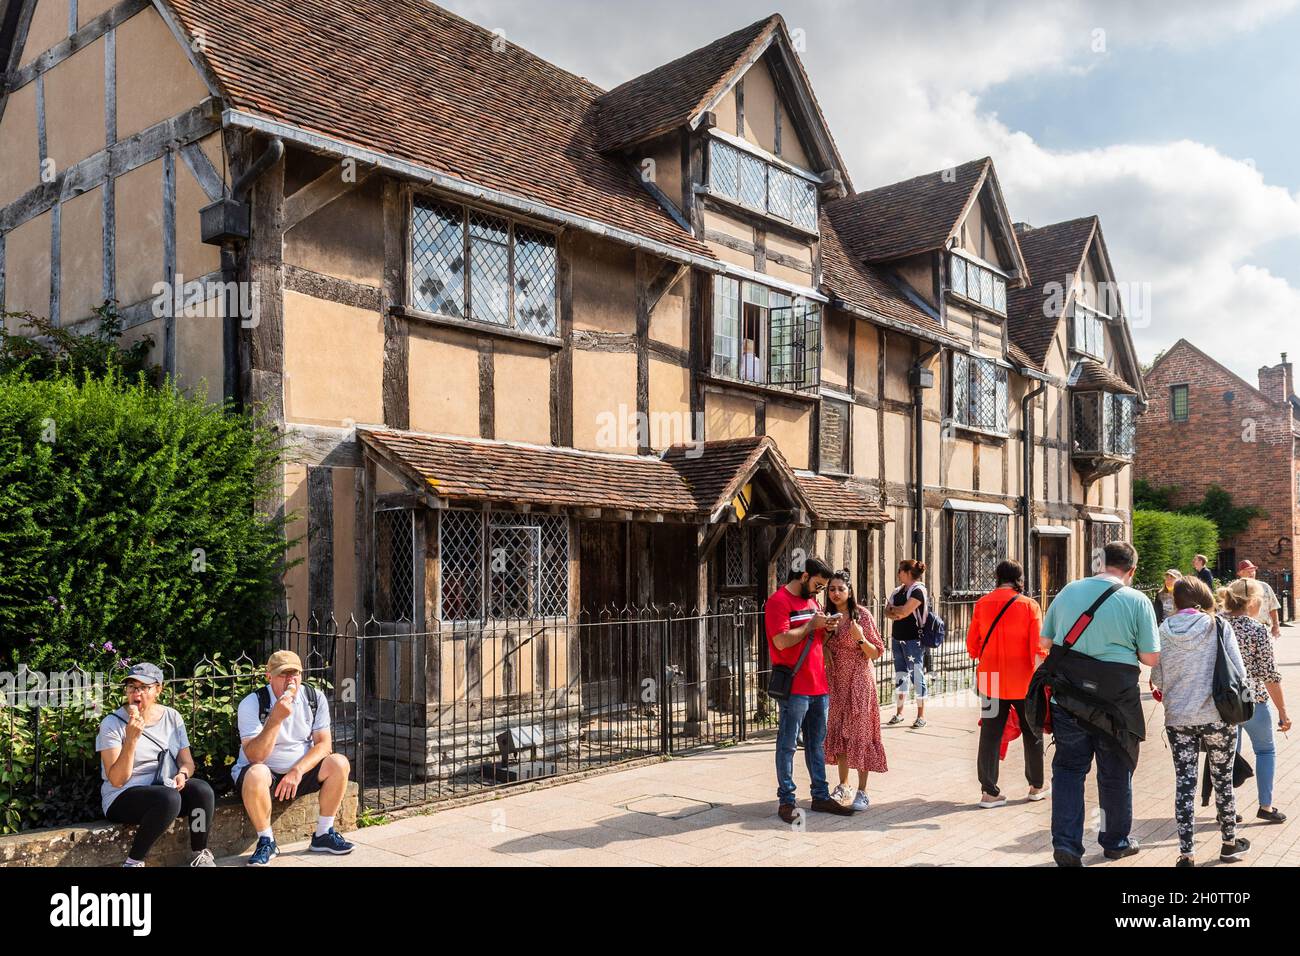 William Shakespeare's house in Stratford-upon-Avon, Warwickshire, UK. Stock Photo